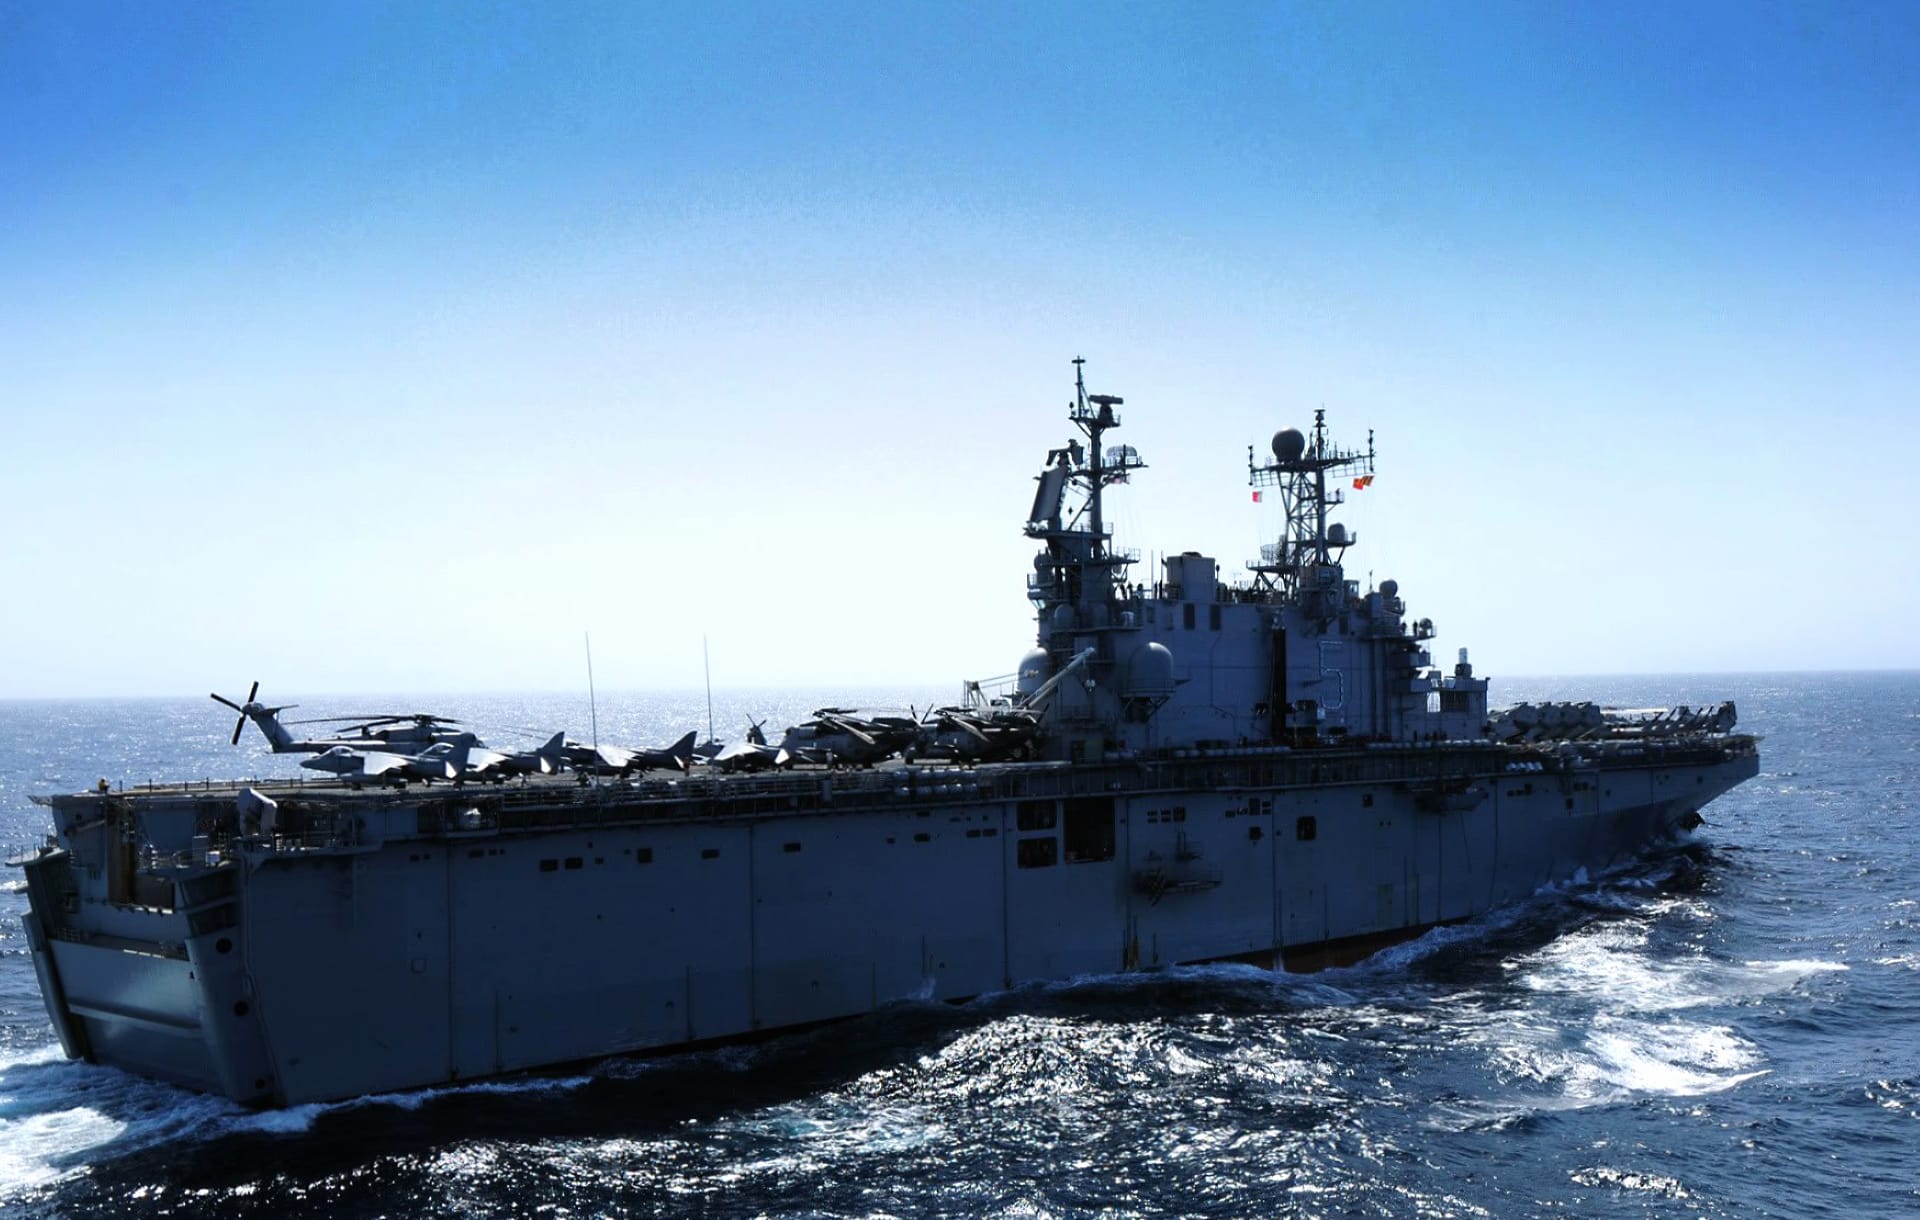 USS Peleliu (LHA-5) at 1280 x 960 size wallpapers HD quality